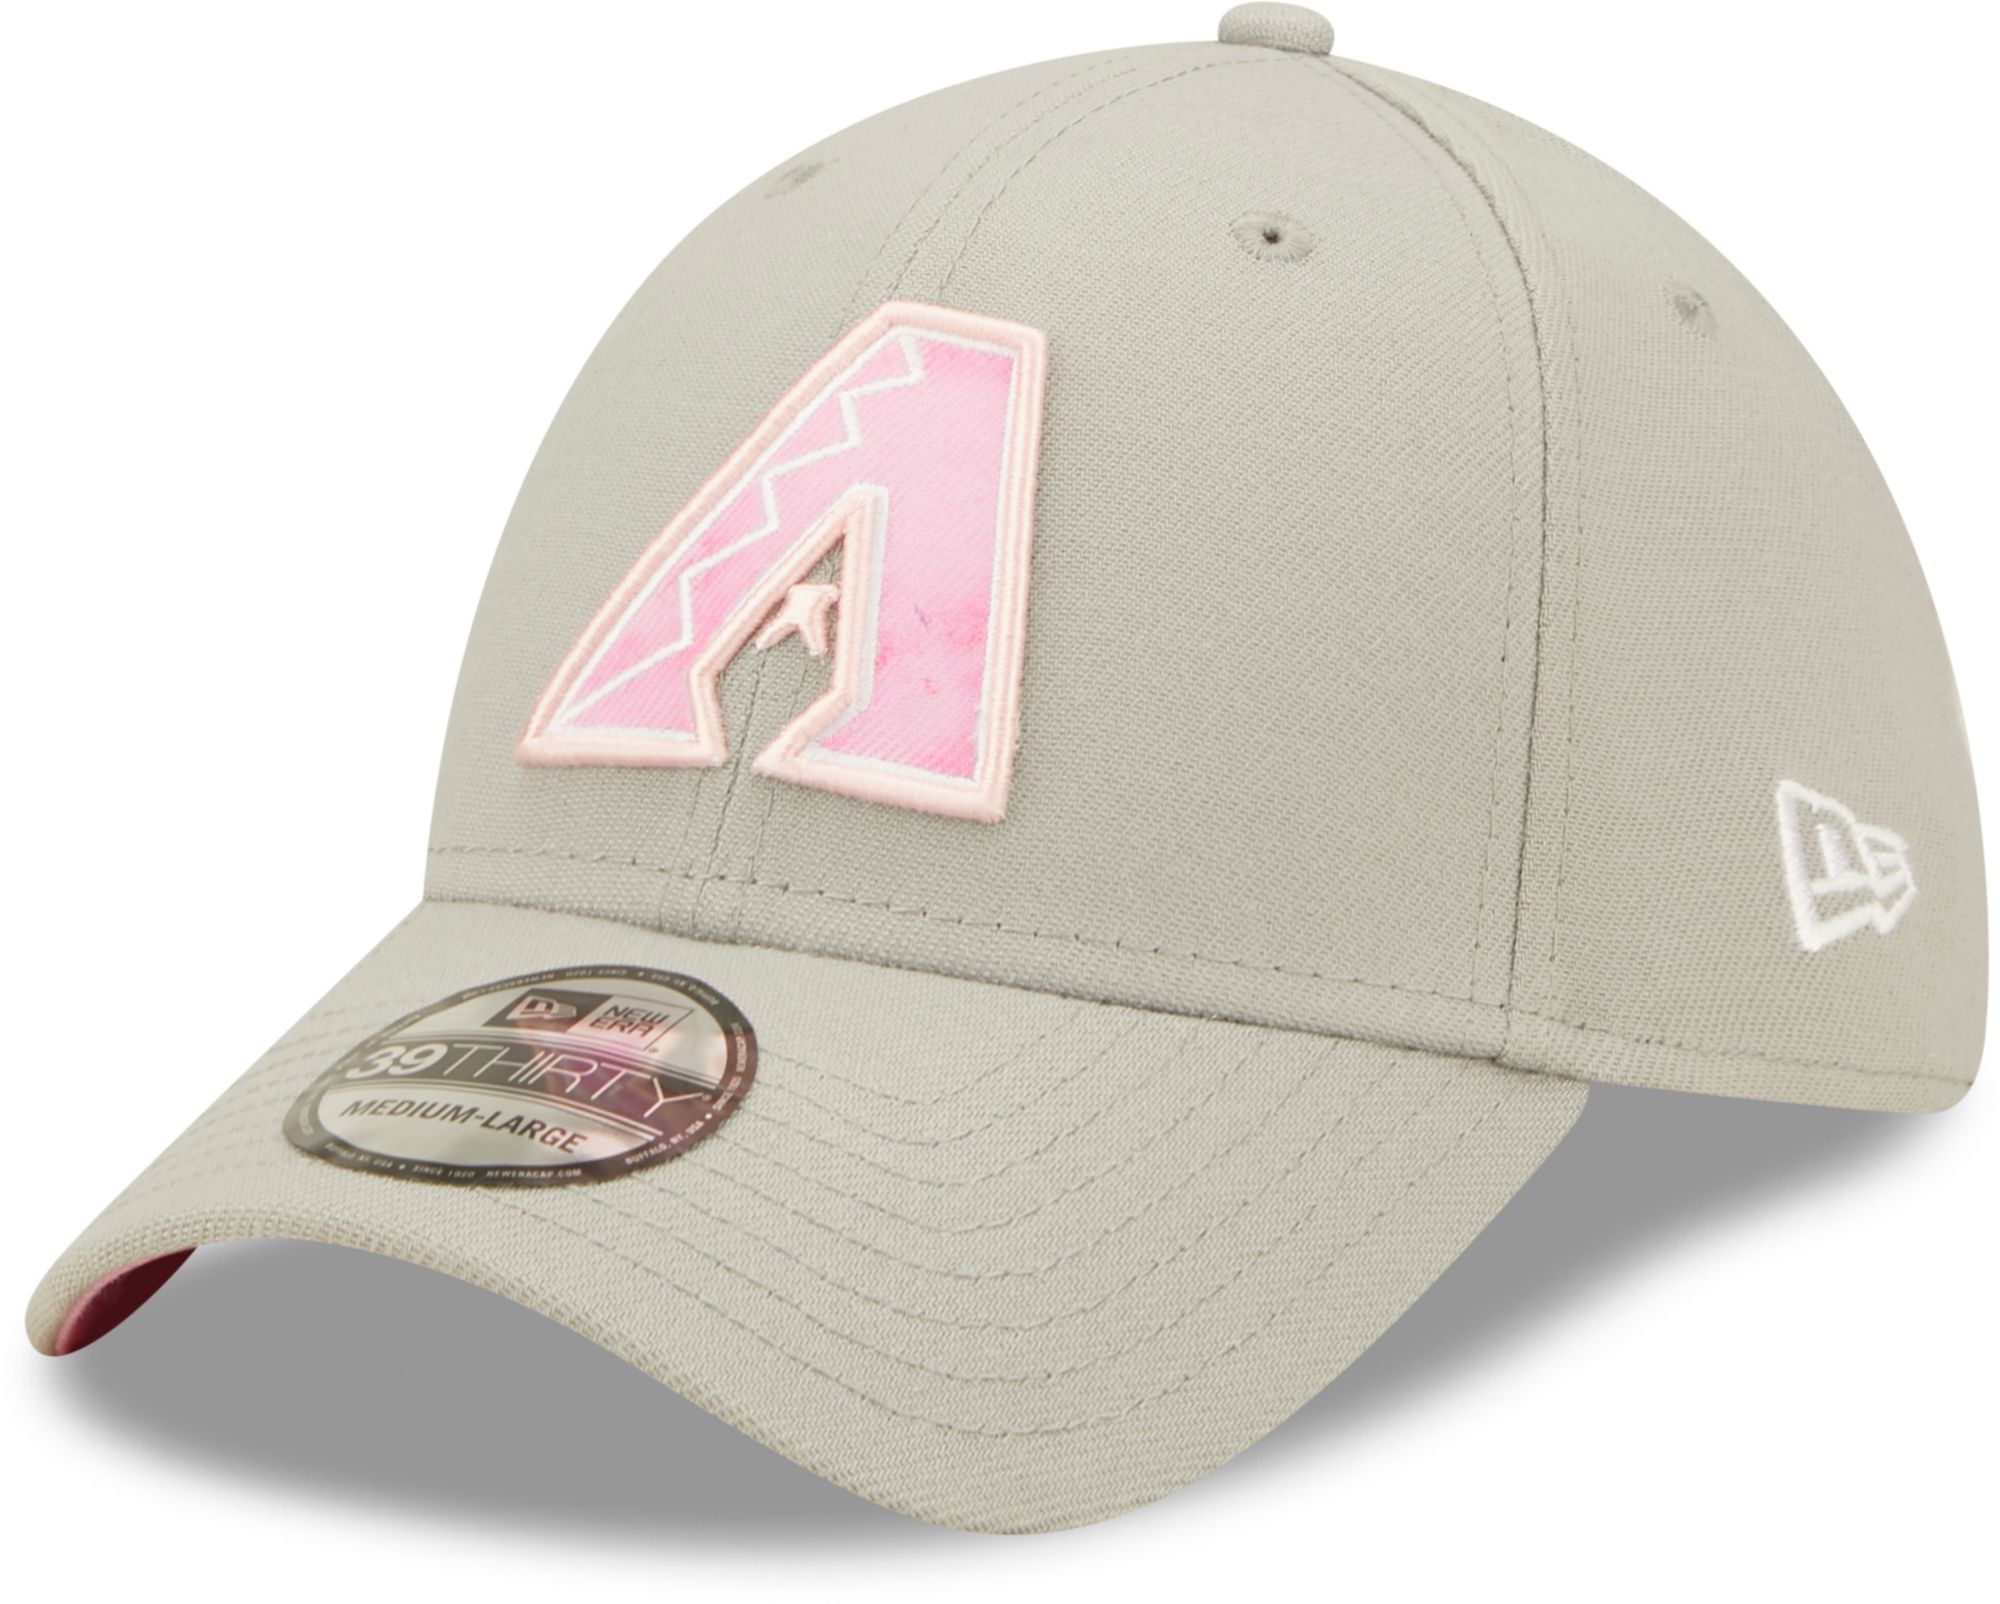 Arizona Diamondbacks Space Collection by New Era. Picked this hat